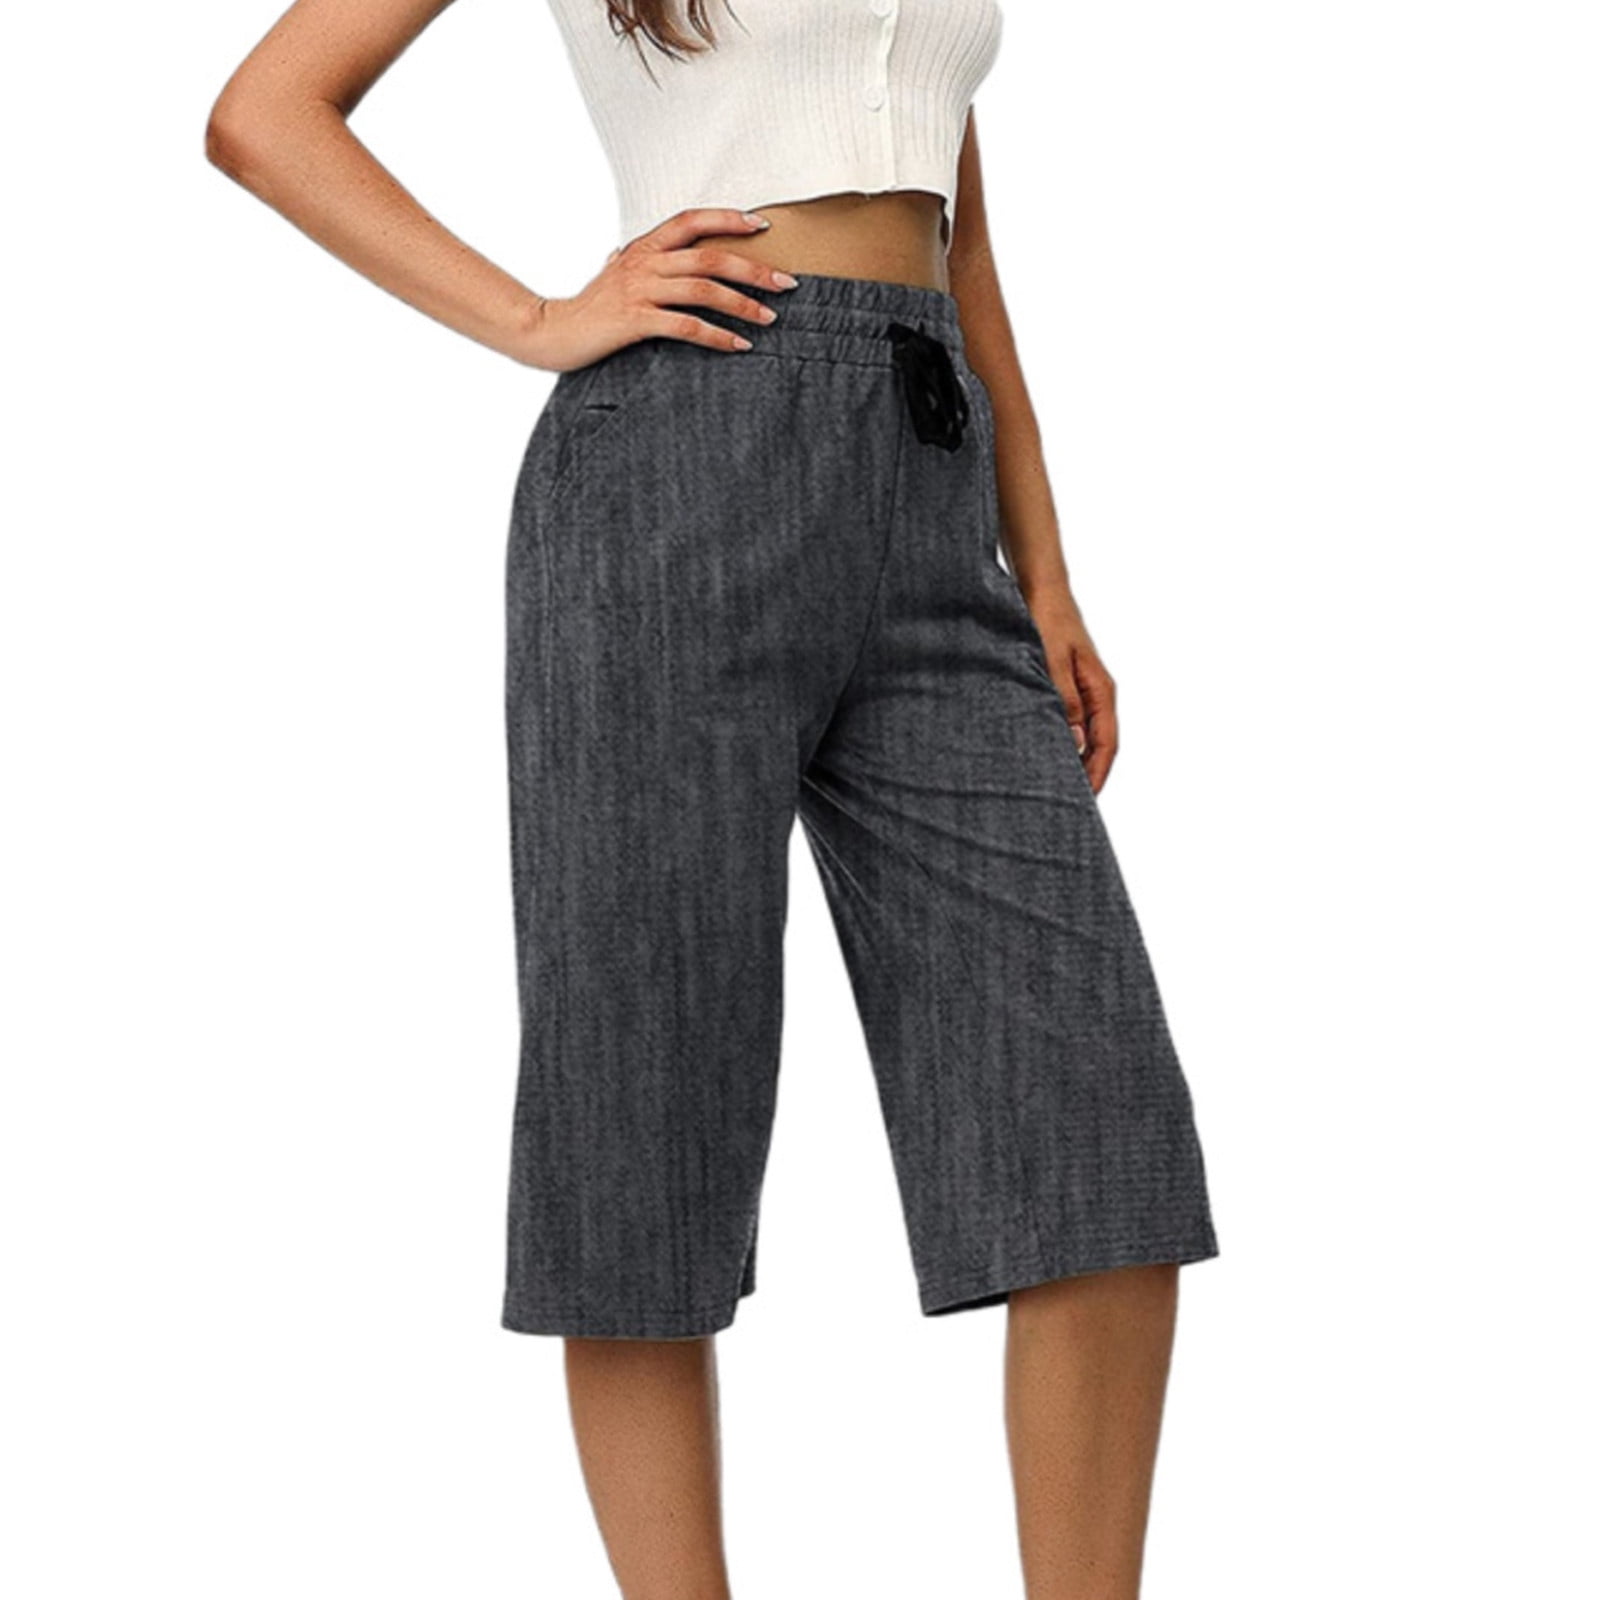 MIUOWANP Dark Gray Capris for Women Plus Size Pants with Pockets ...